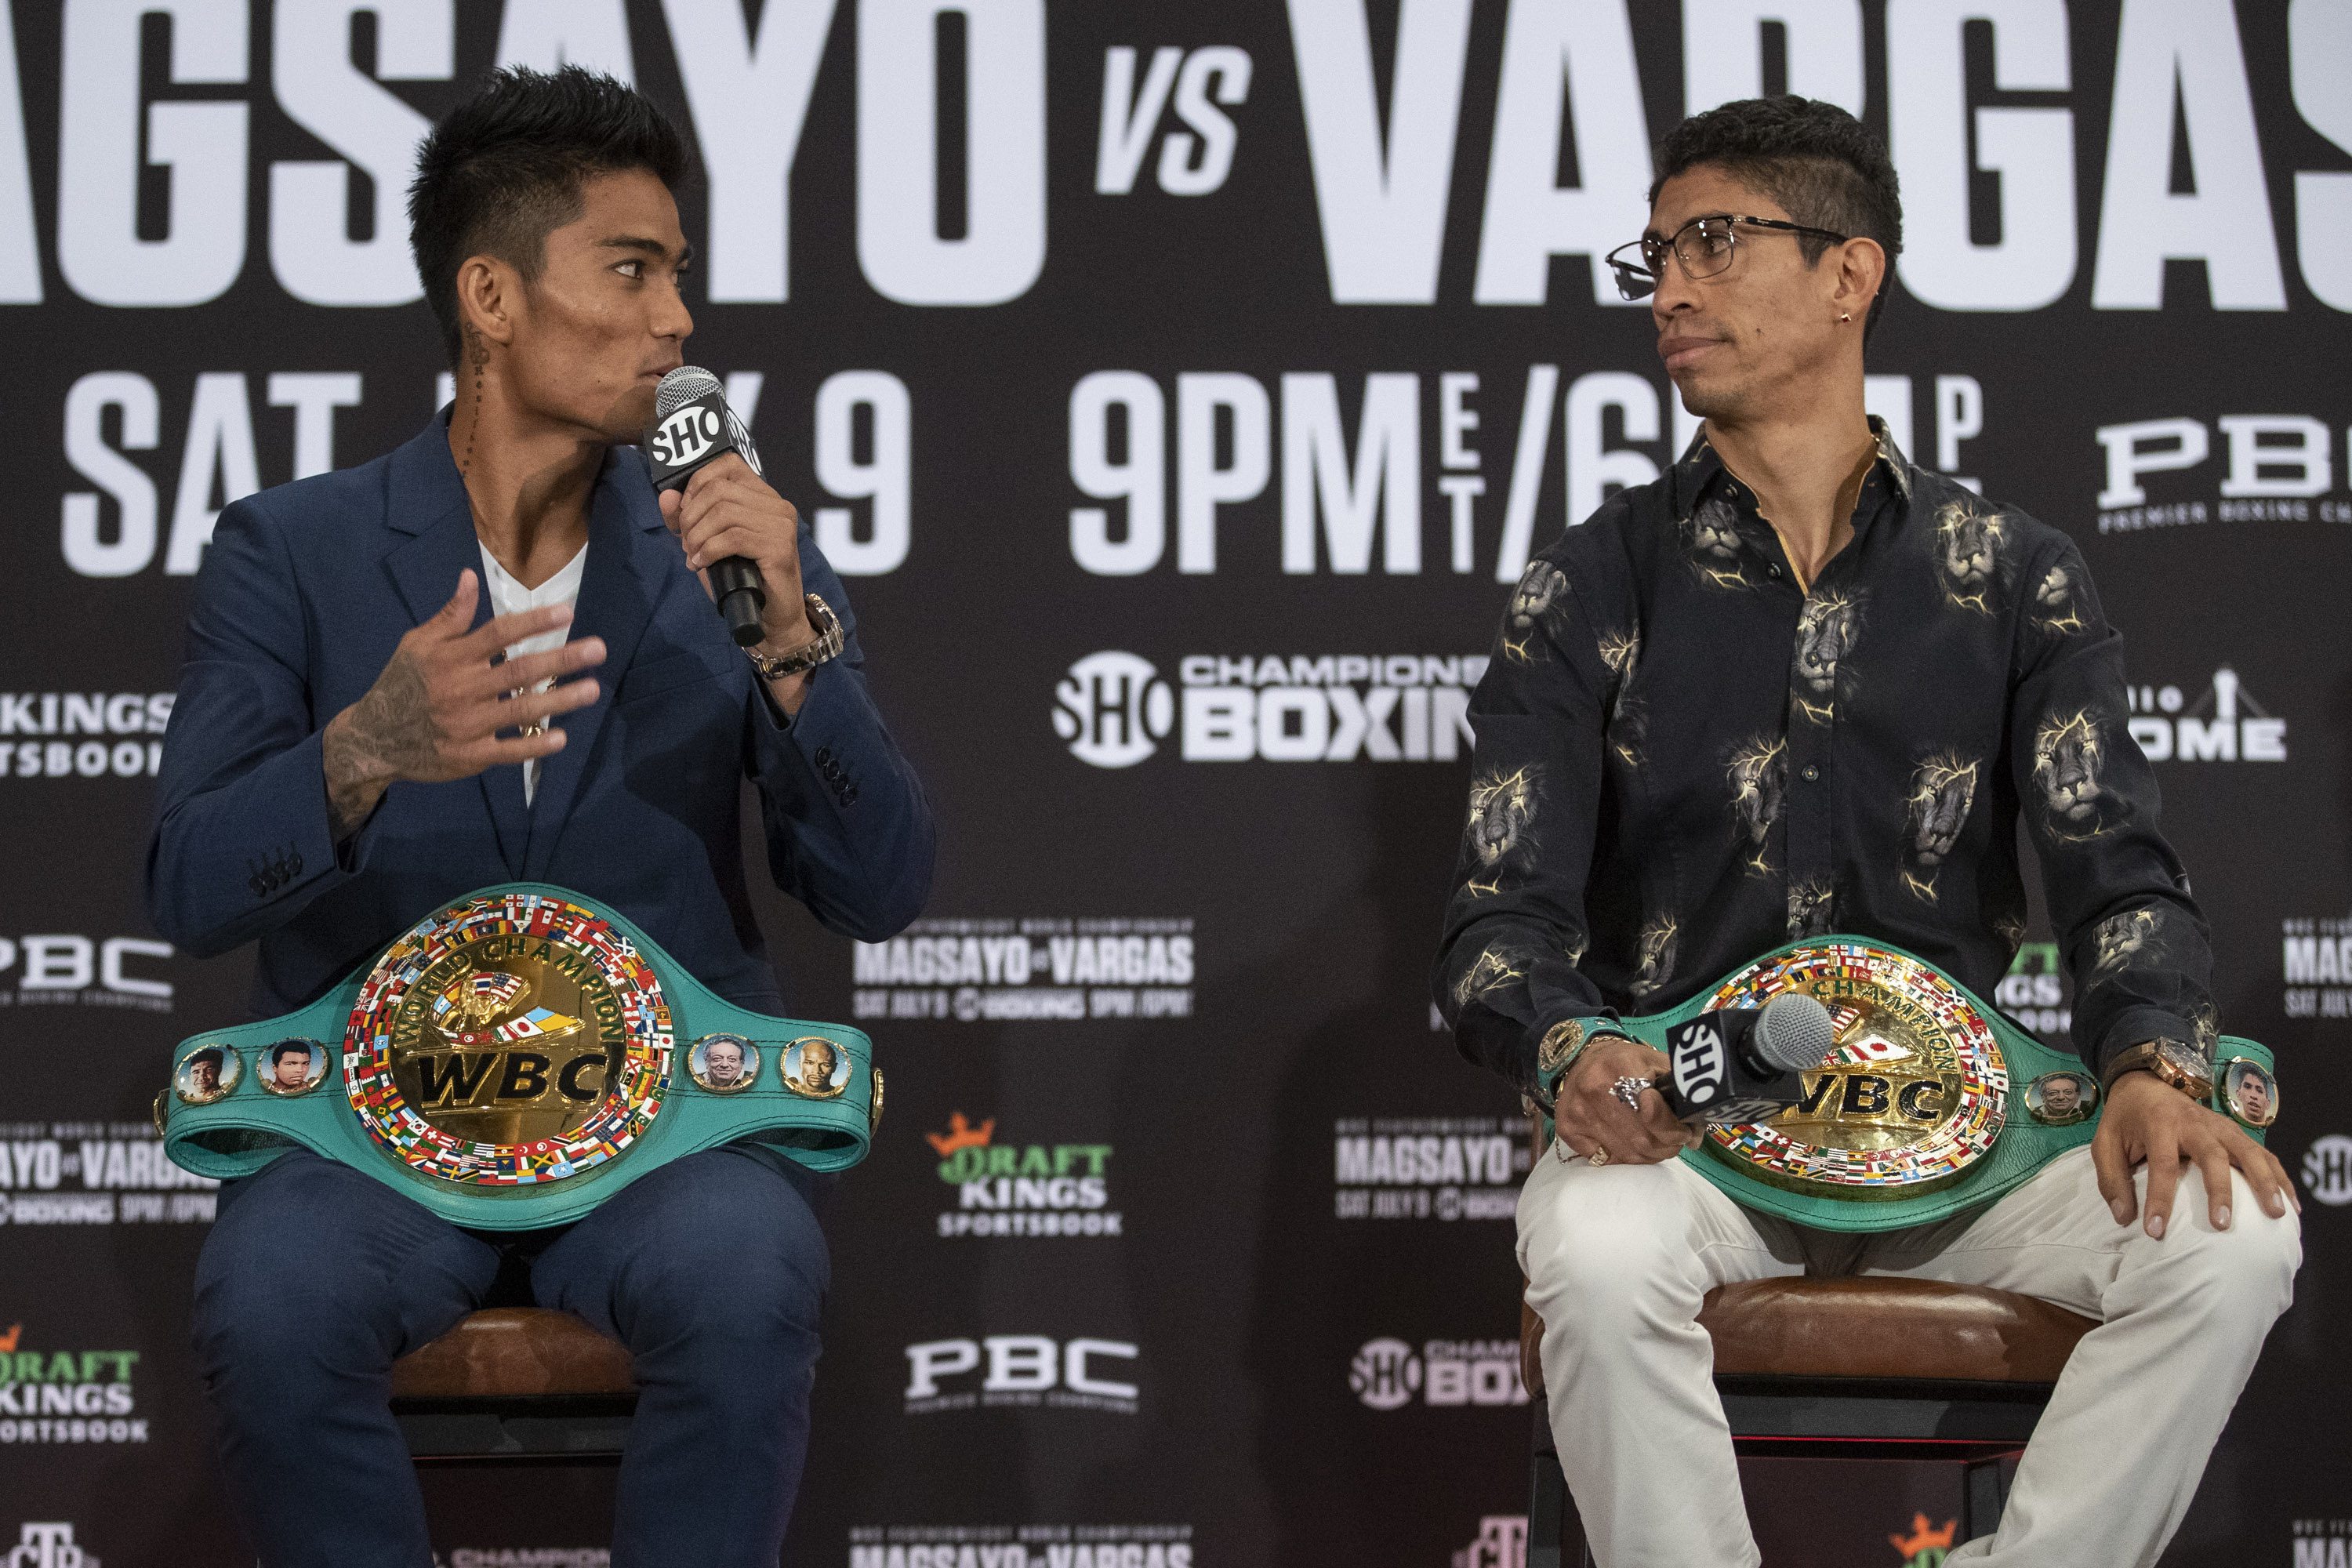 Rey Vargas, Magsayo vs Rey Vargas fight, Key details, Boxing showdown, 3000x2000 HD Desktop